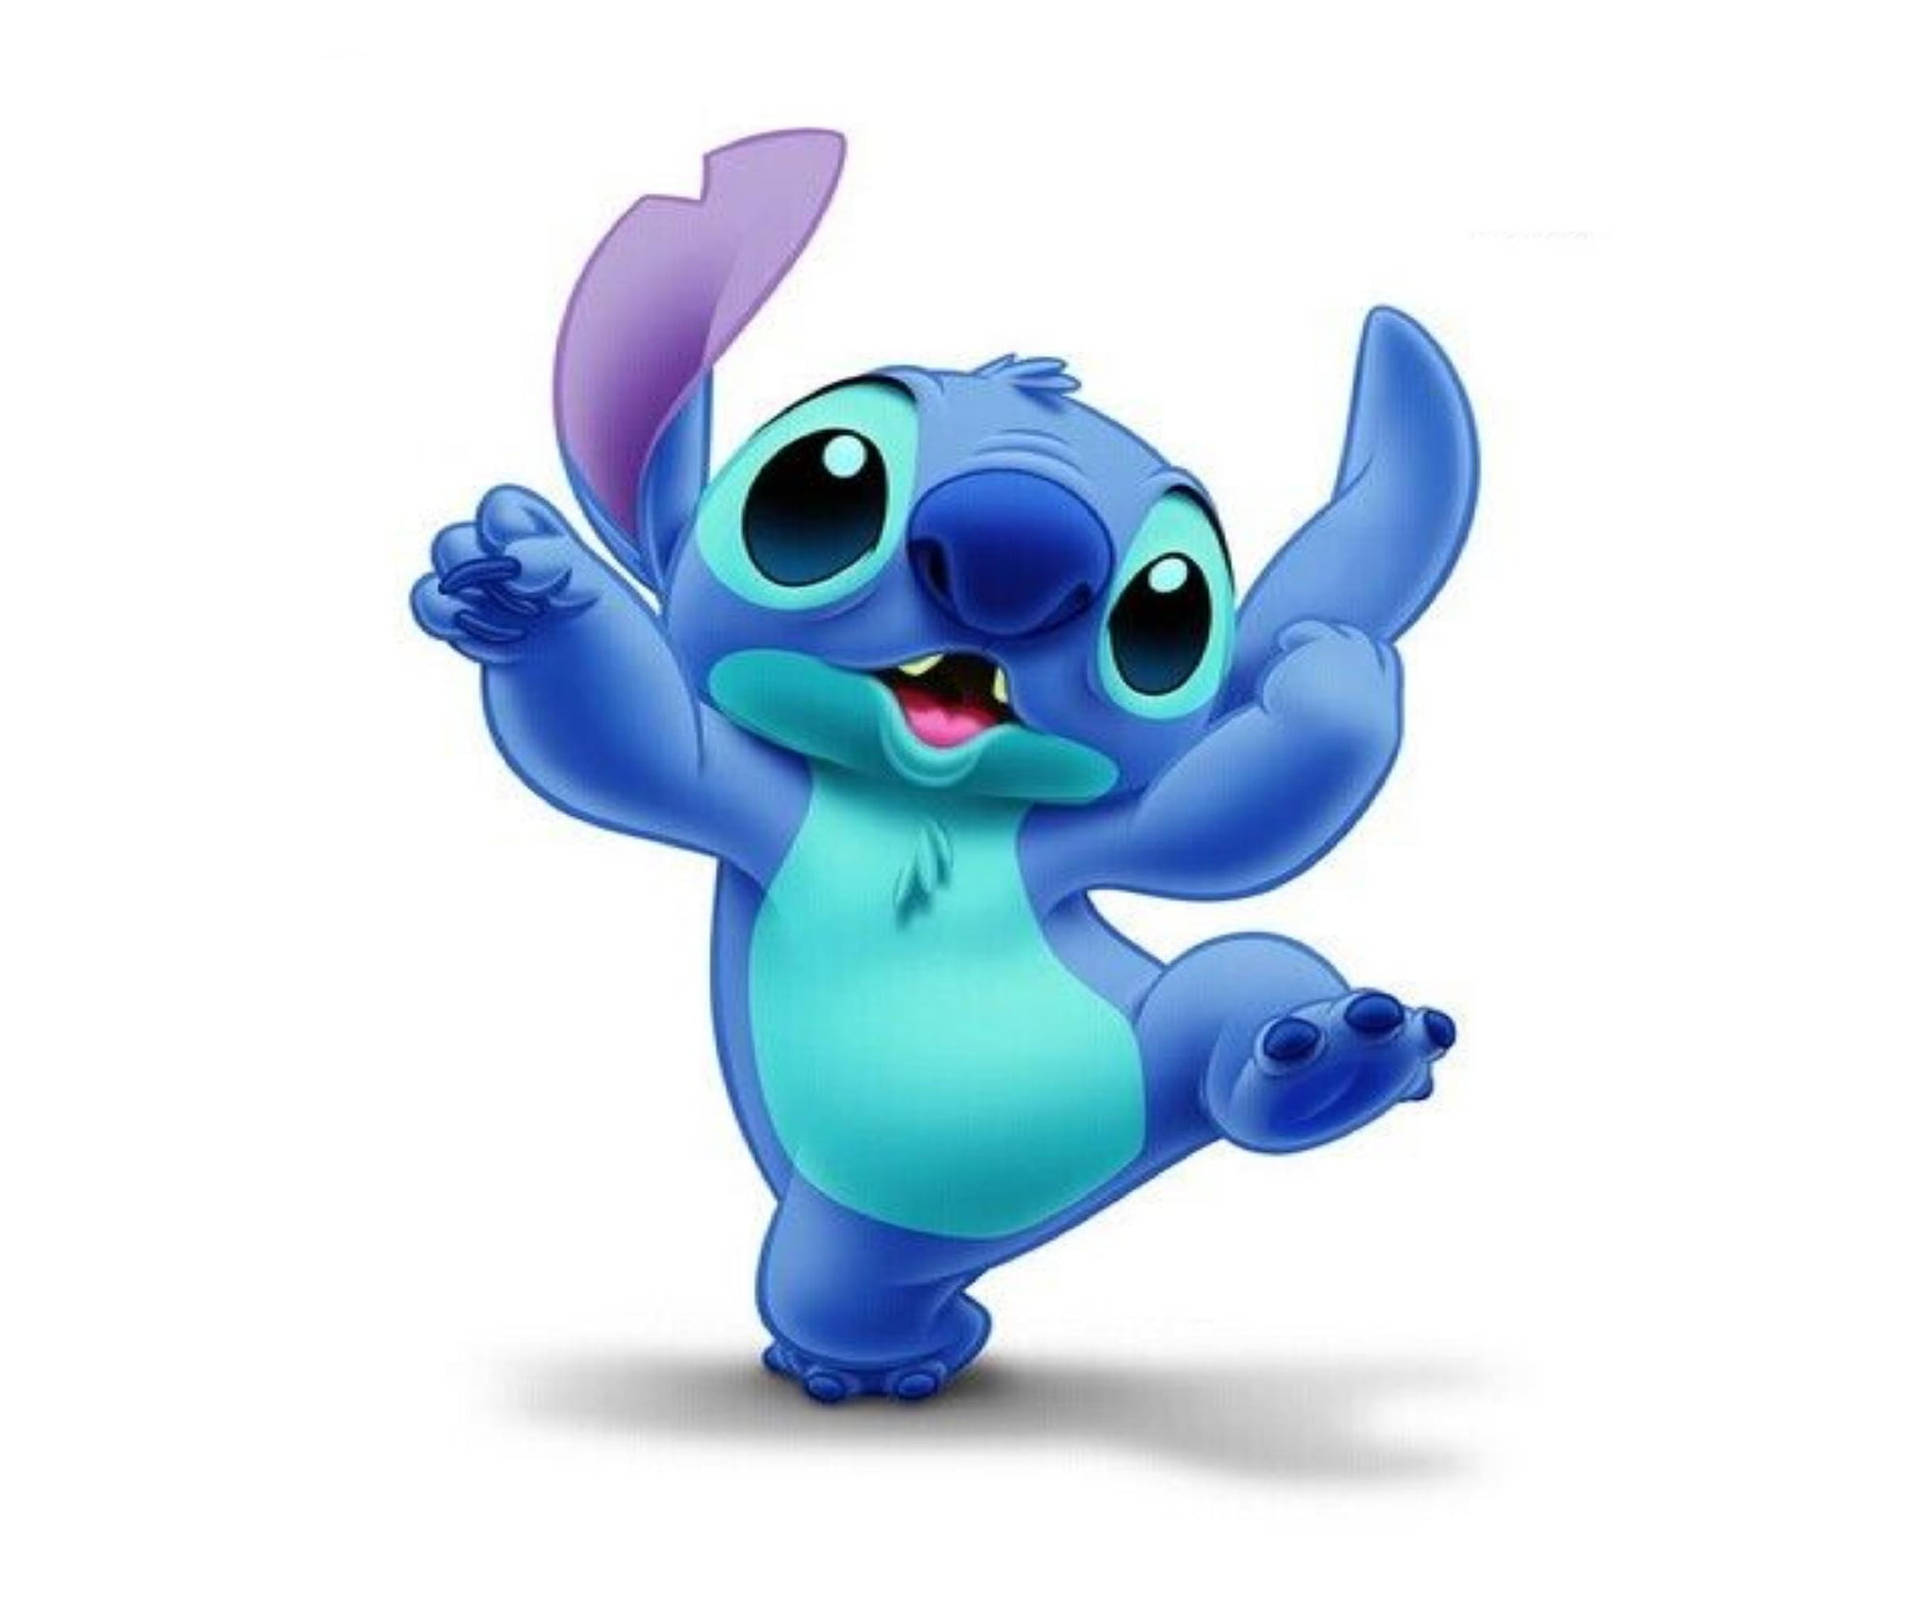 Top 999+ Stitch Disney Wallpaper Full HD, 4K Free to Use